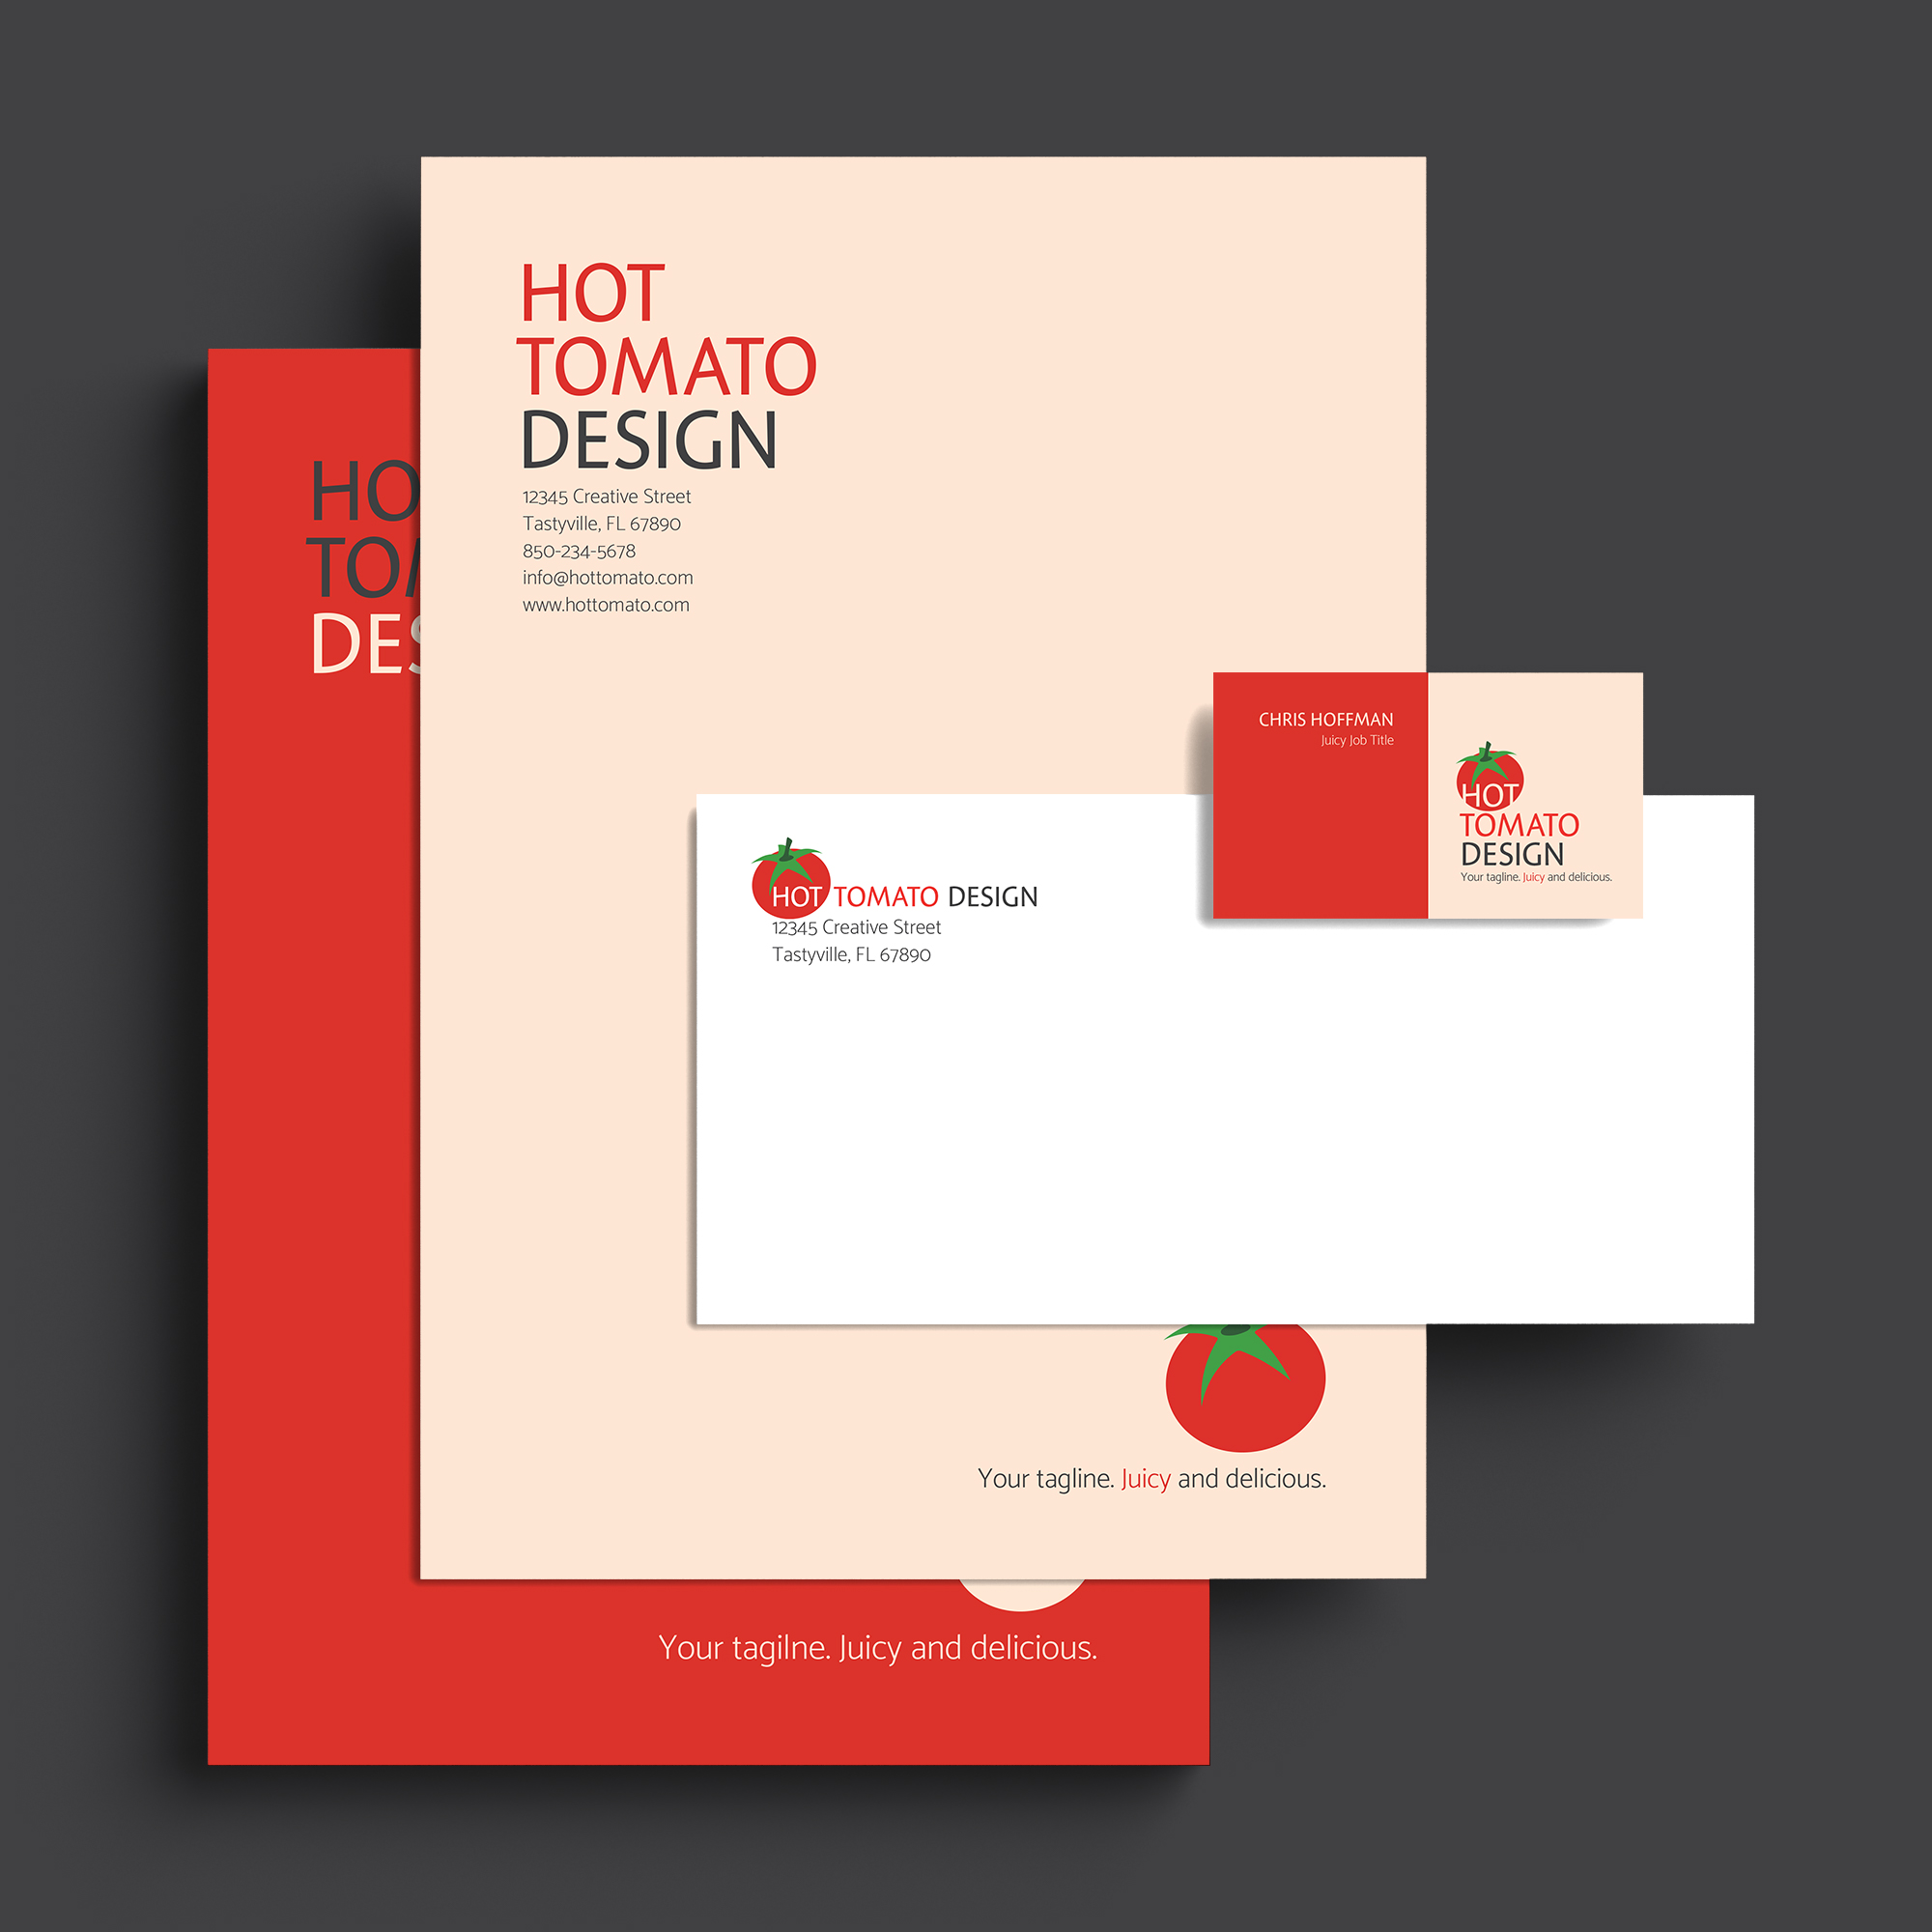 Hot Tomato Design Logo